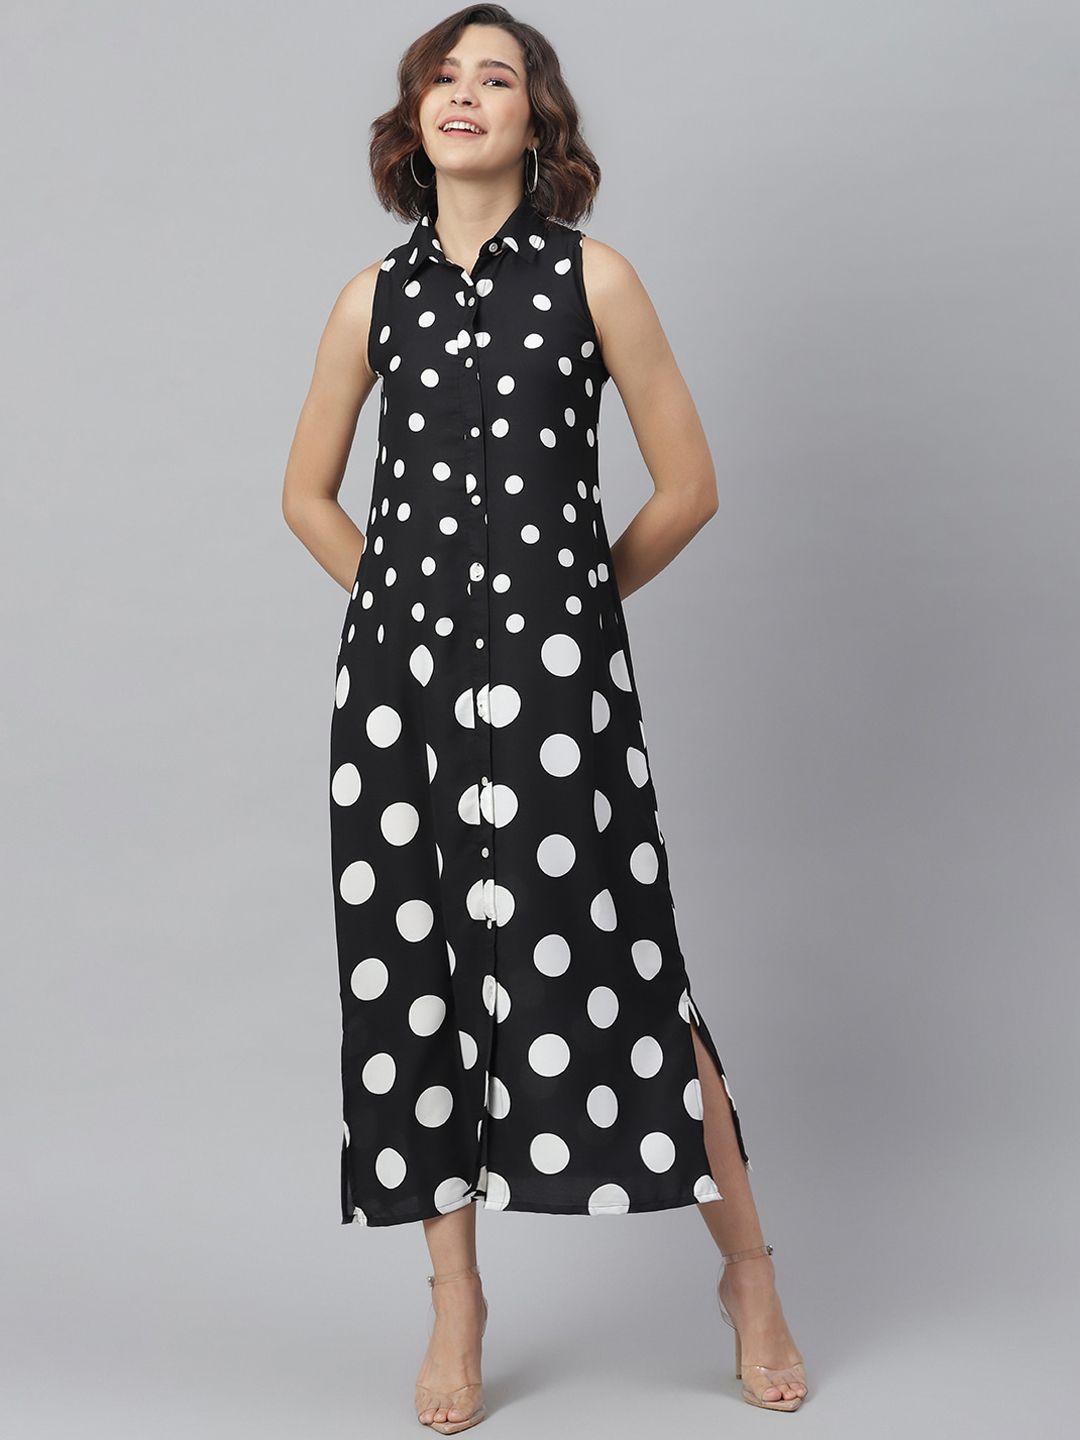 stylestone-women-black-&-white-polka-dot-printed-maxi-dress